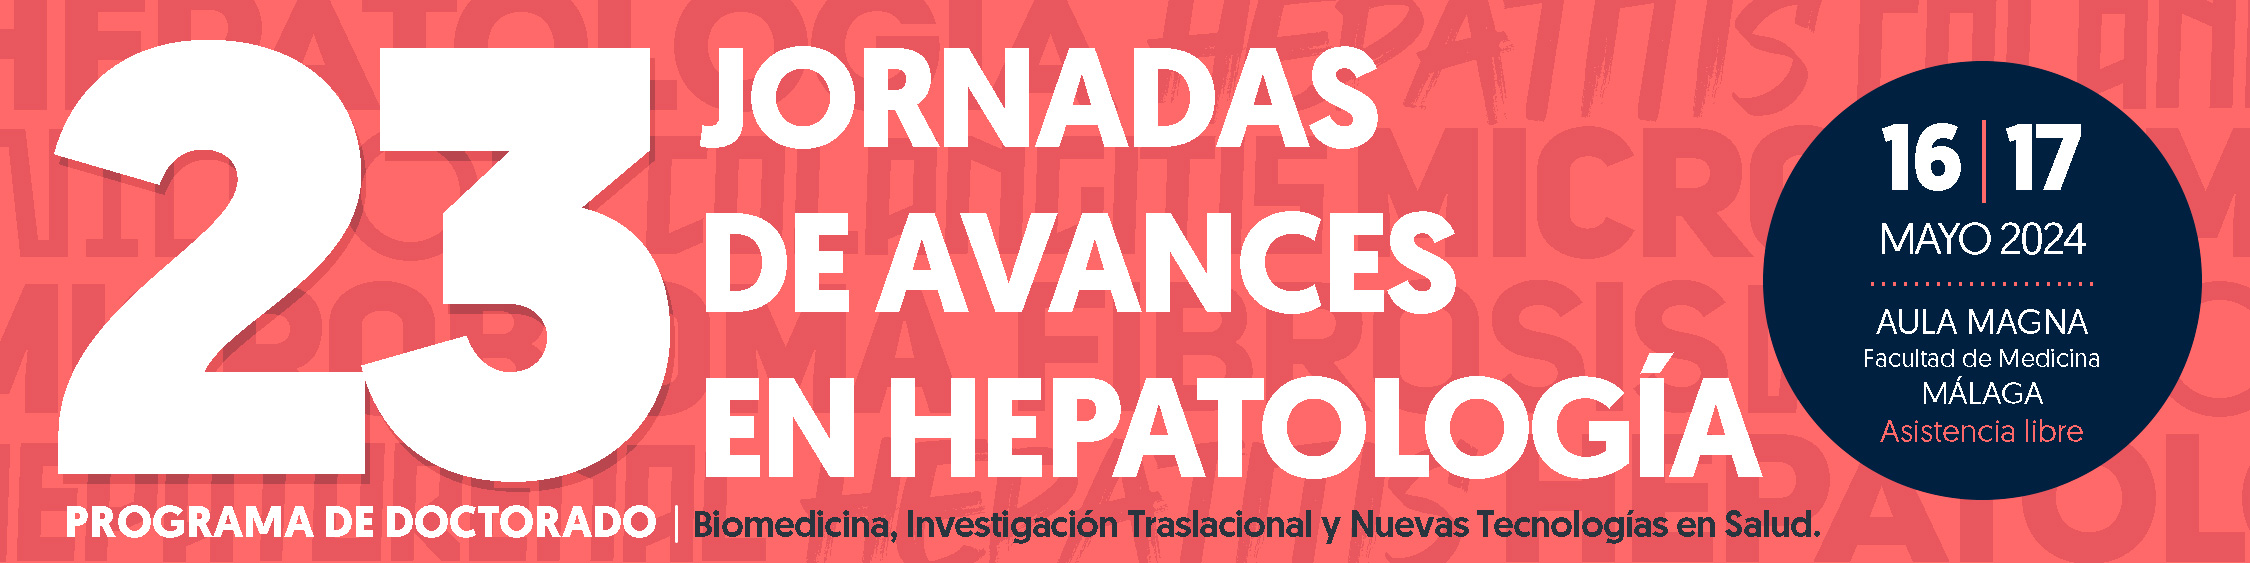 XXI JORNADAS DE AVANCES EN HEPATOLOGIA